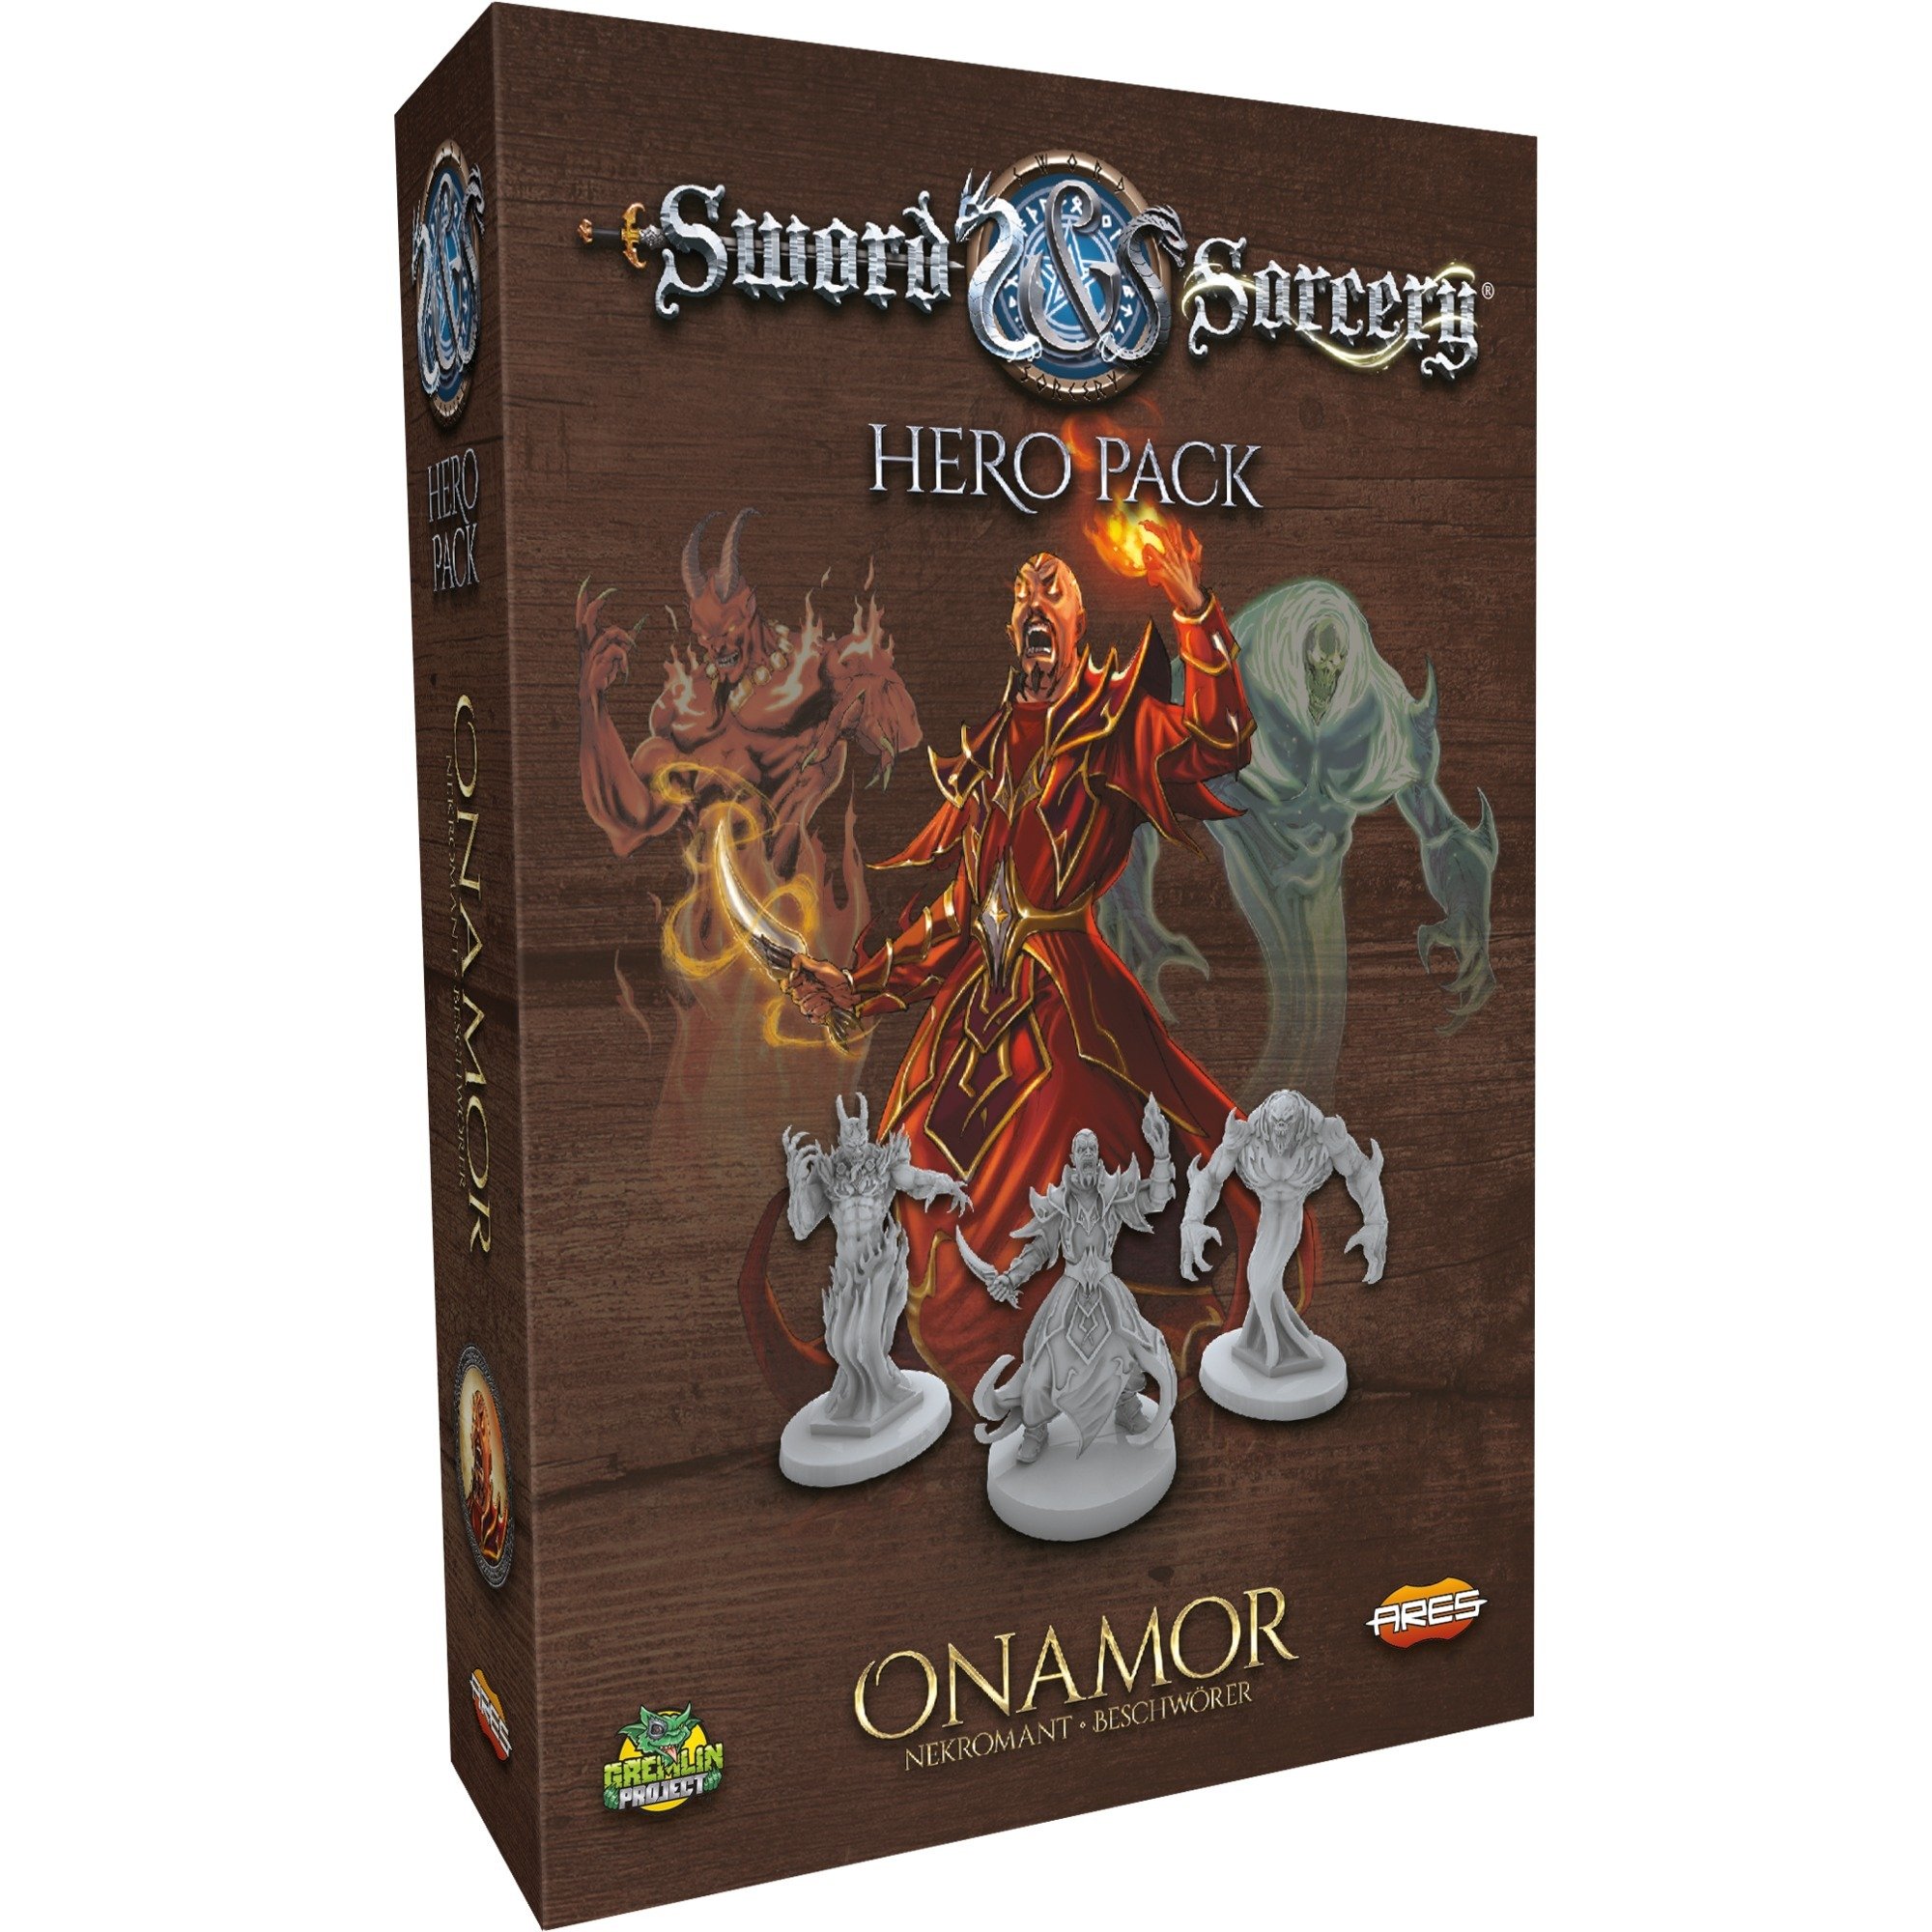 Image of Alternate - Sword & Sorcery: Onamor - Hero Pack, Brettspiel online einkaufen bei Alternate